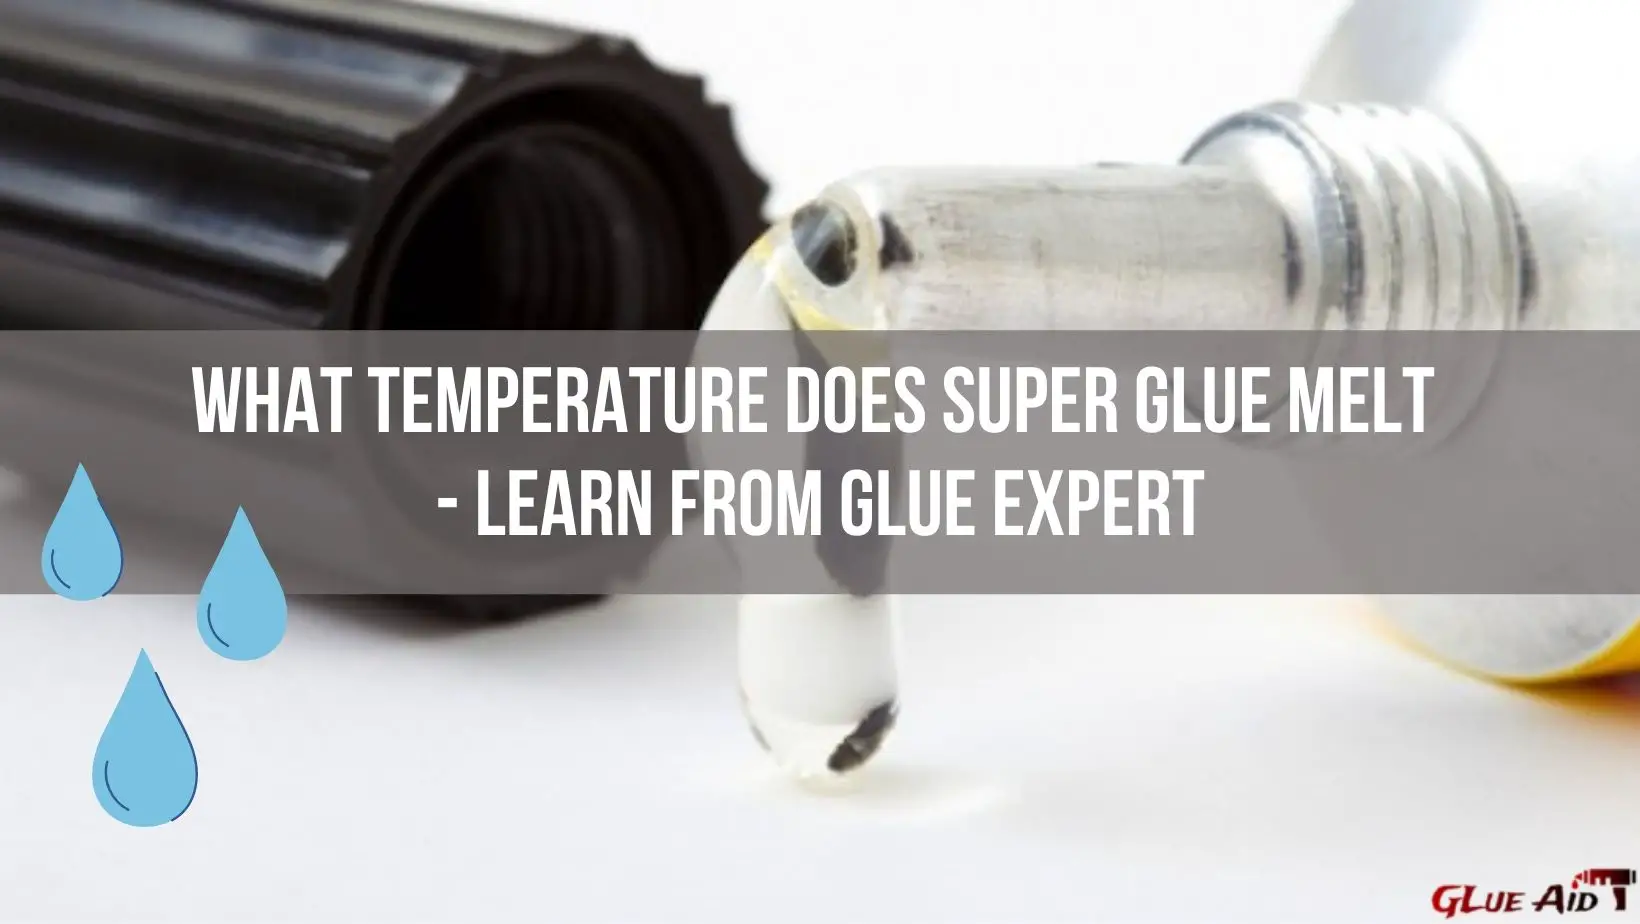 At What Temperature Does Super Glue Melt